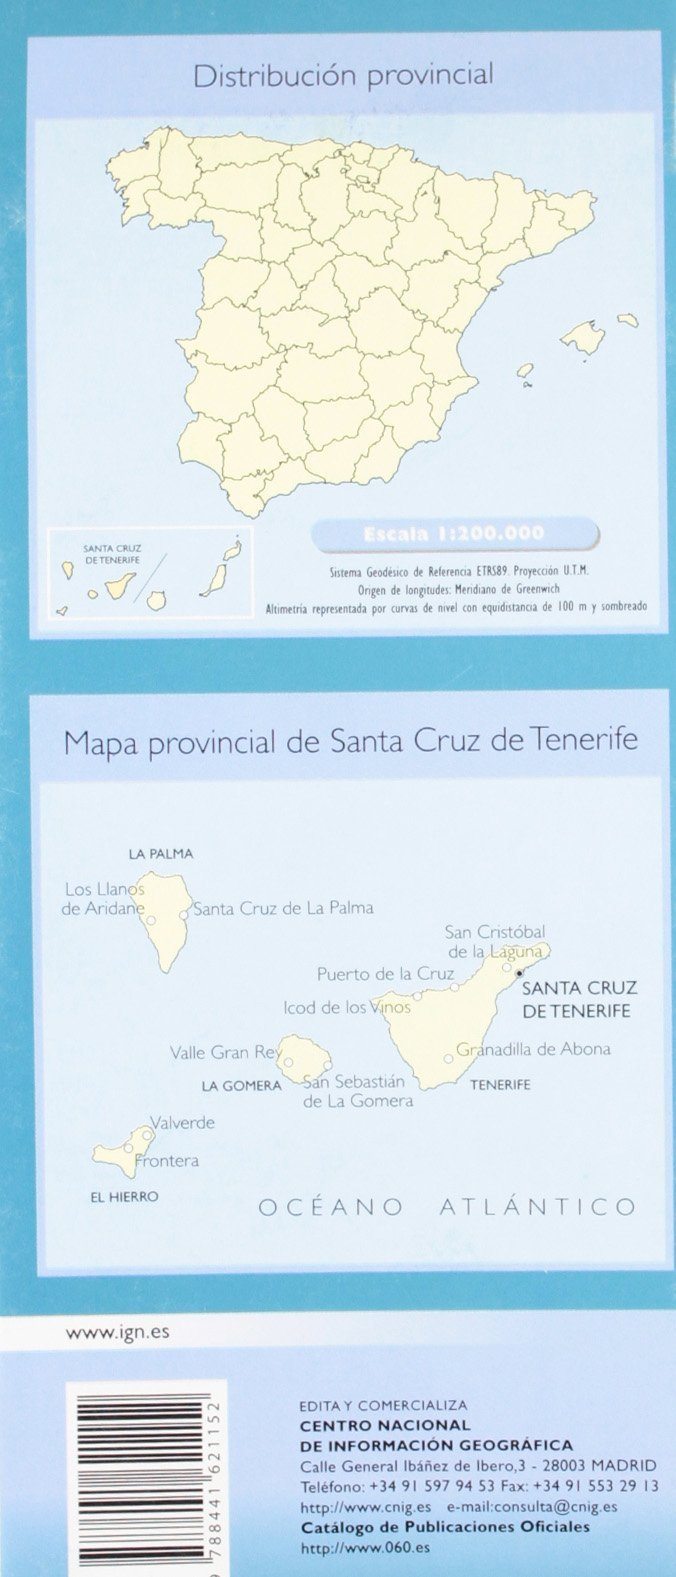 Carte routière provinciale - Santa Cruz de Tenerife (Tenerife, îles Canaries), n° 38 | CNIG carte pliée CNIG 